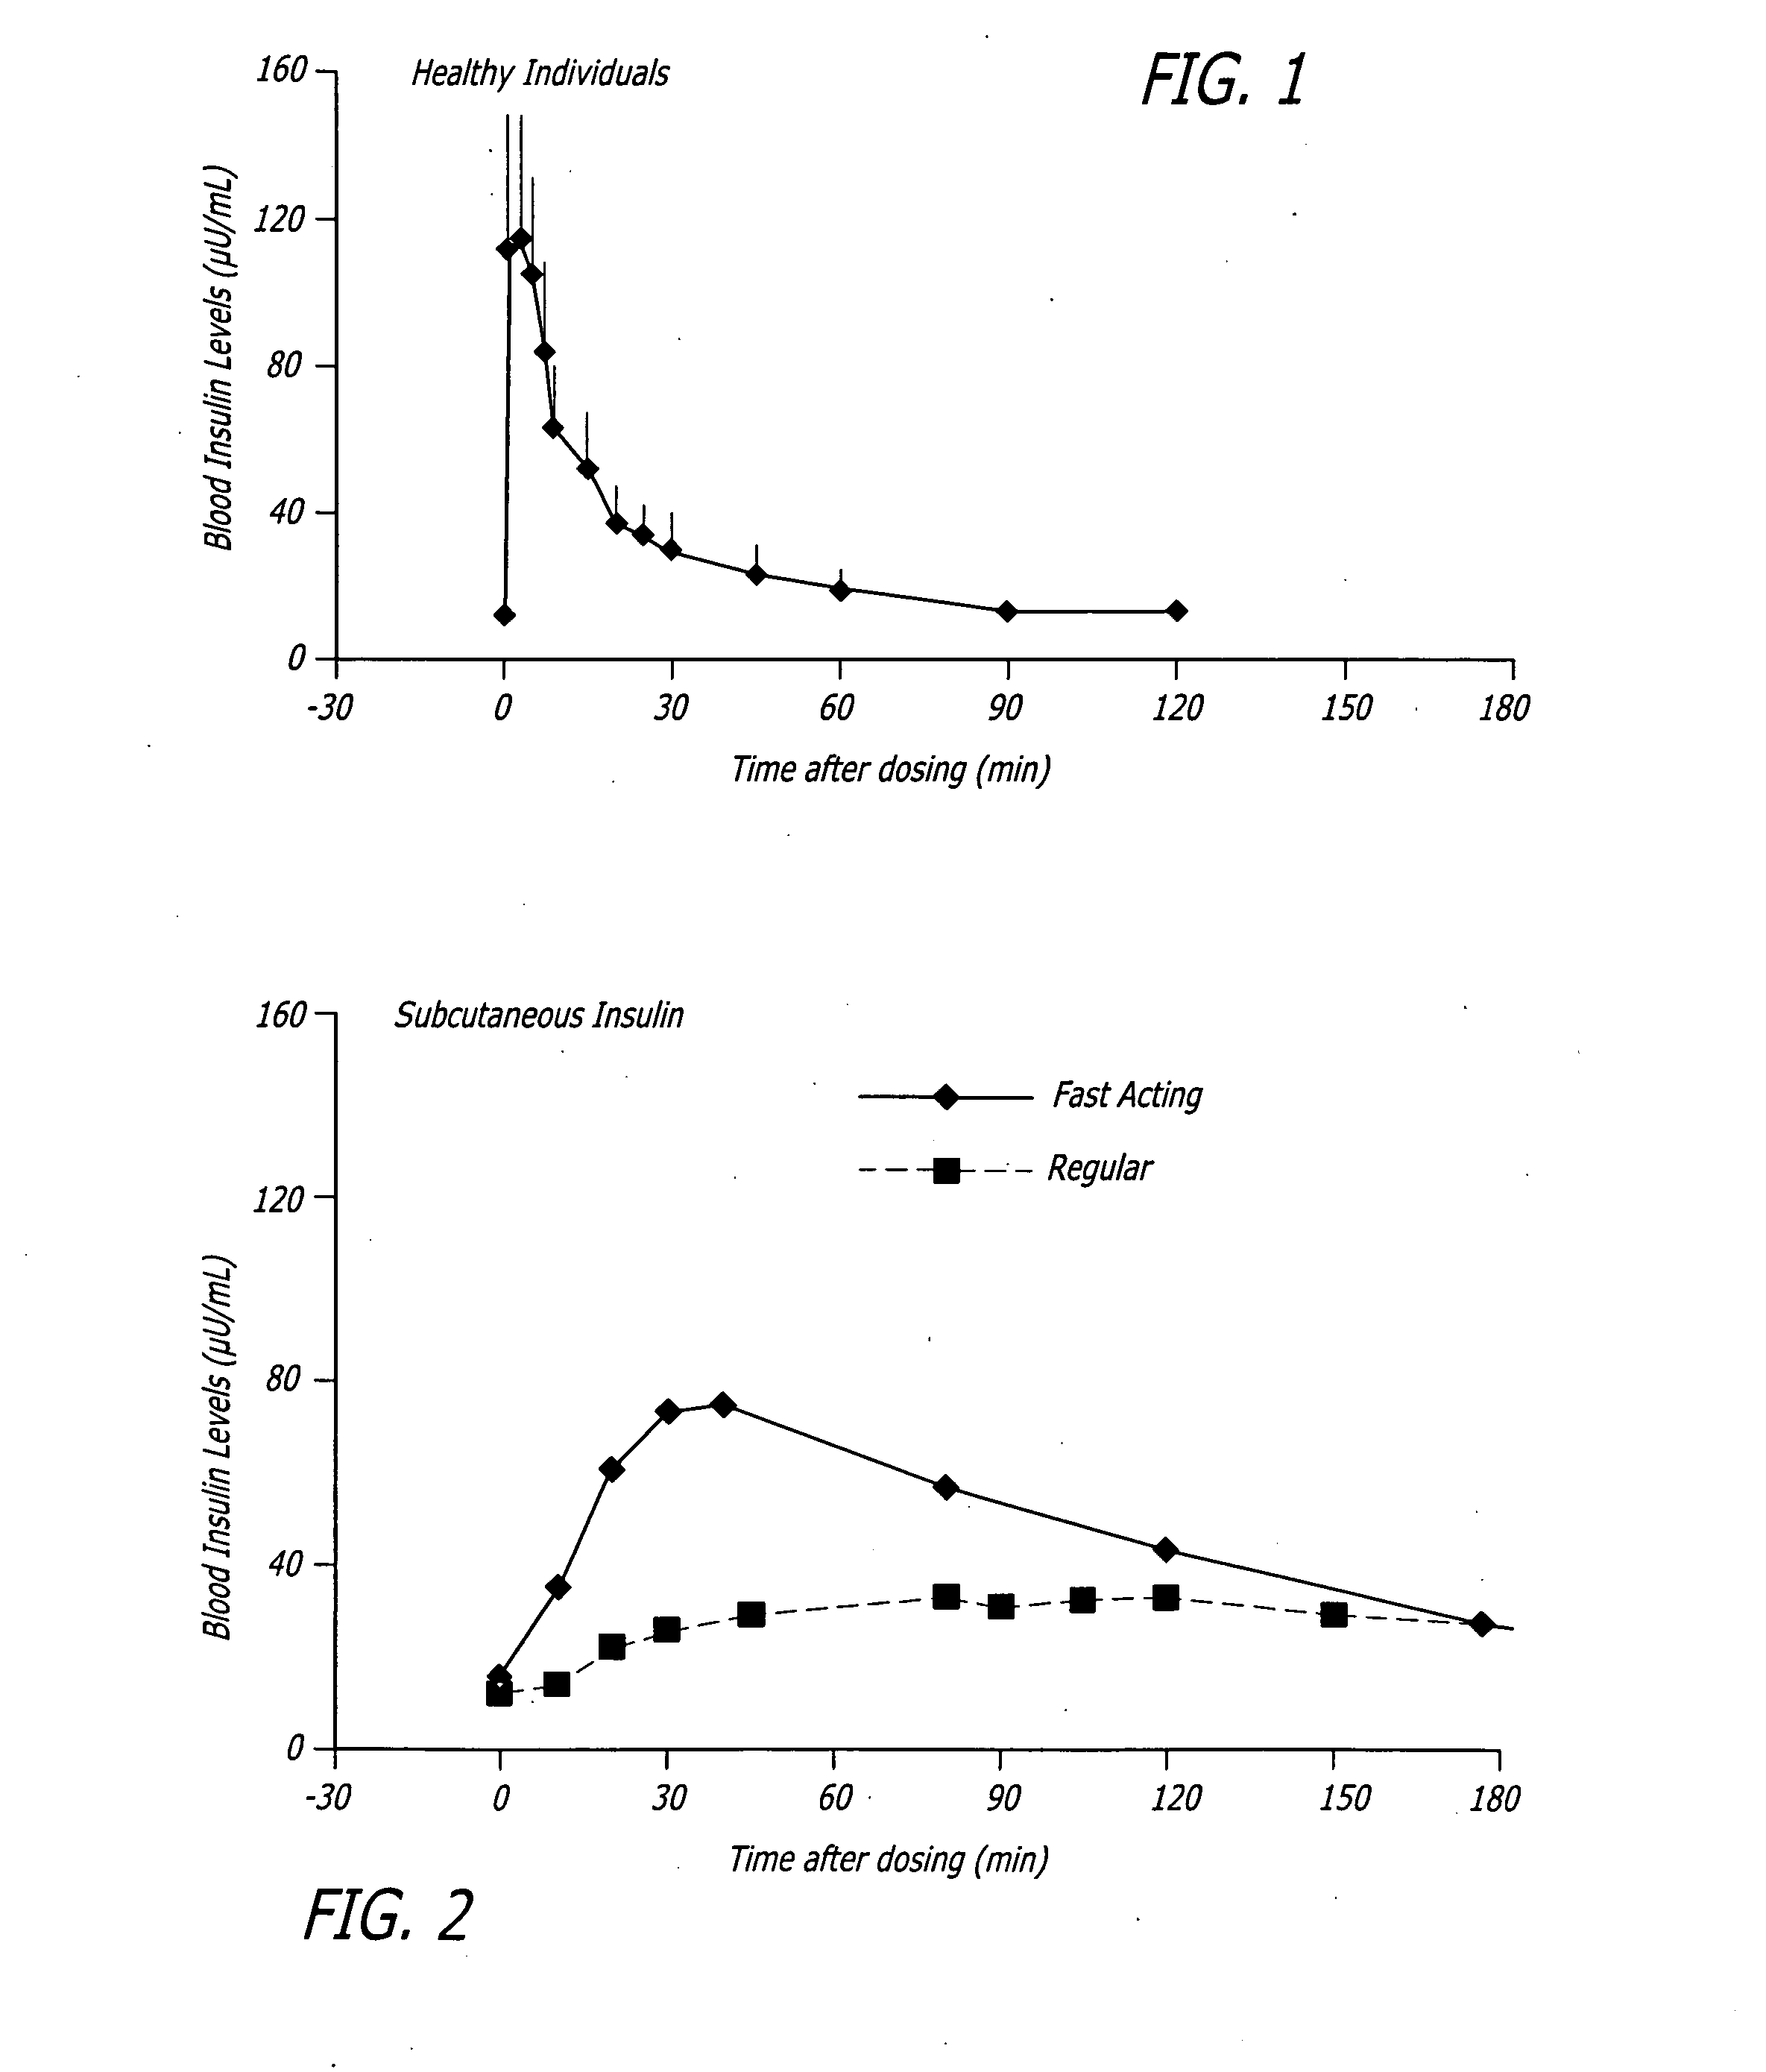 Potentiation of glucose elimination